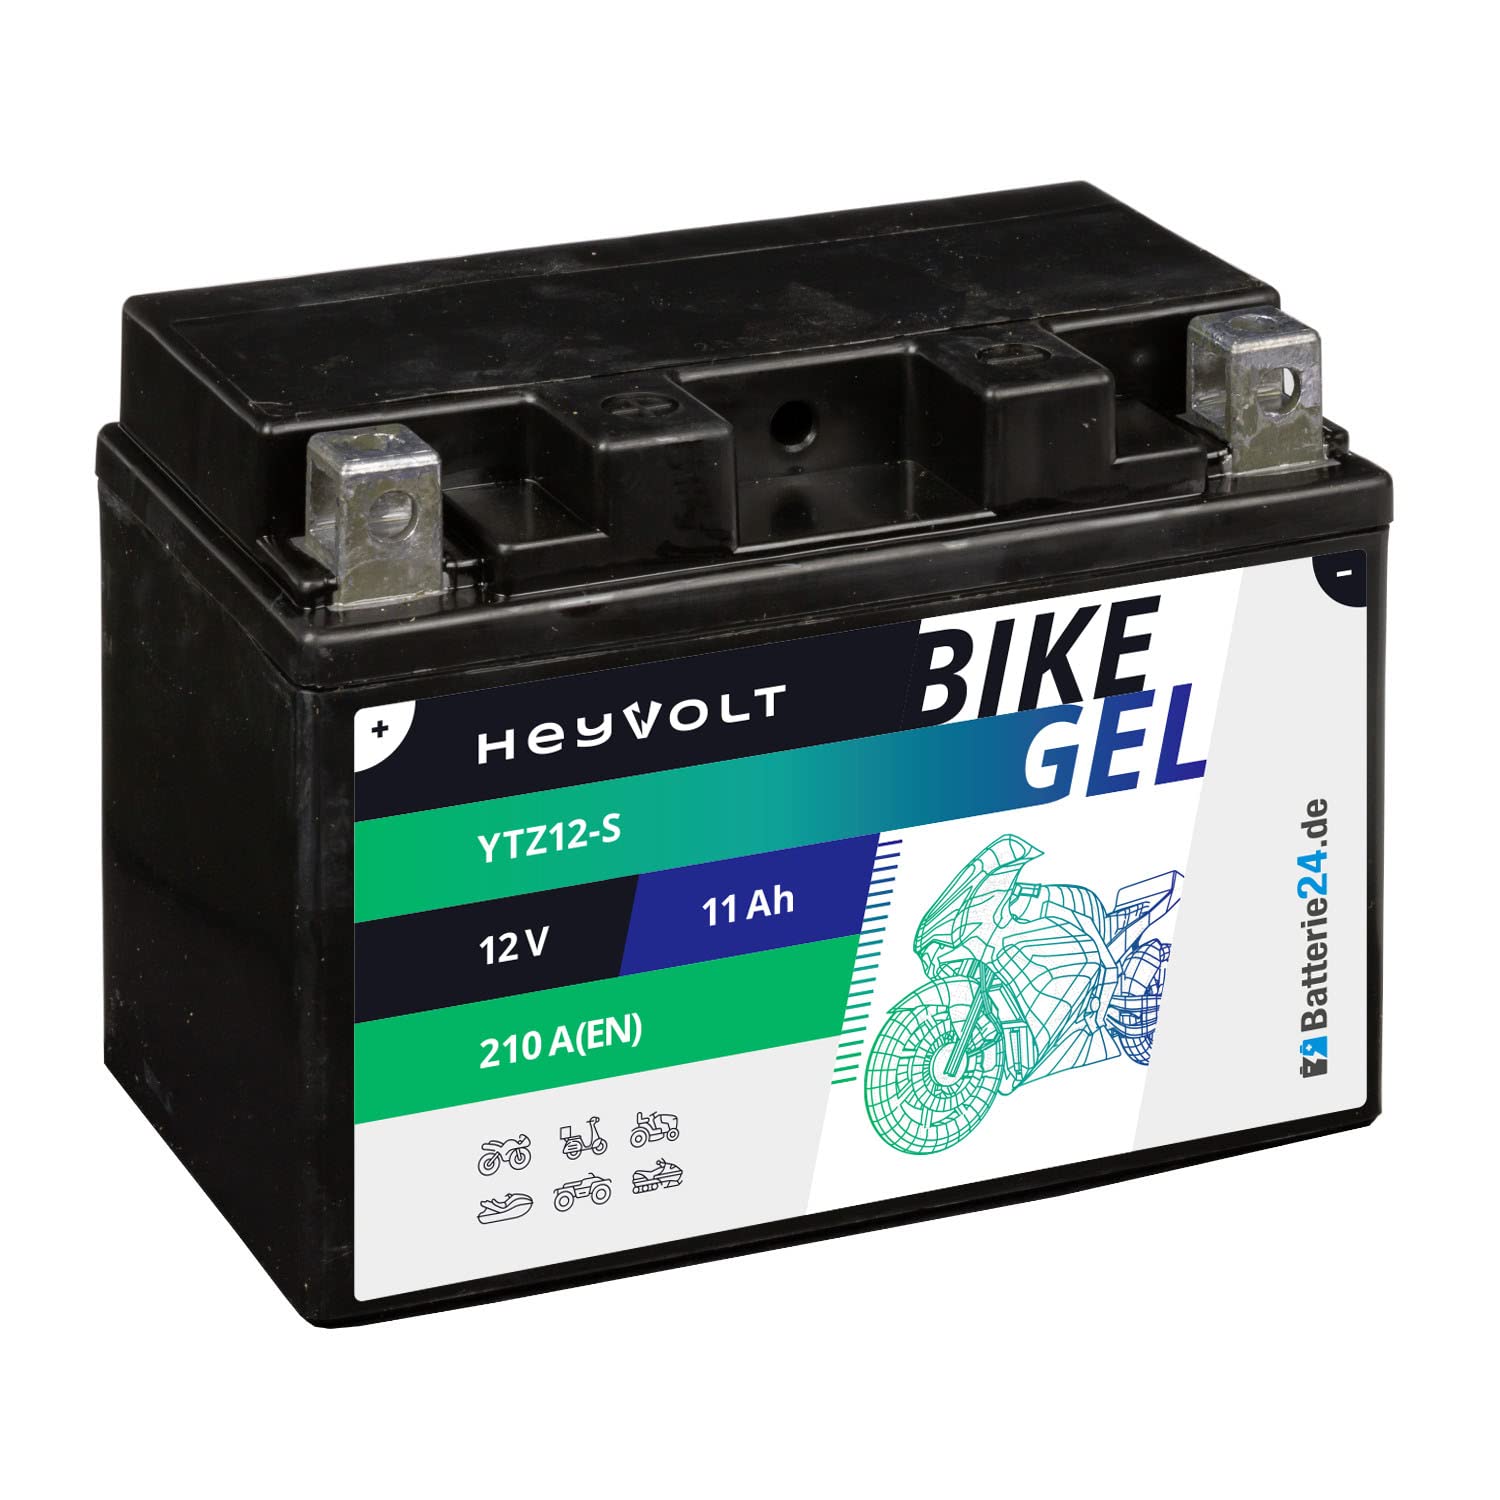 HeyVolt GEL Motorradbatterie 12V 11Ah 51120 YTZ12-S CTZ14-S ETZ14-S YTZ14-4, 51101 von Batterie24.de